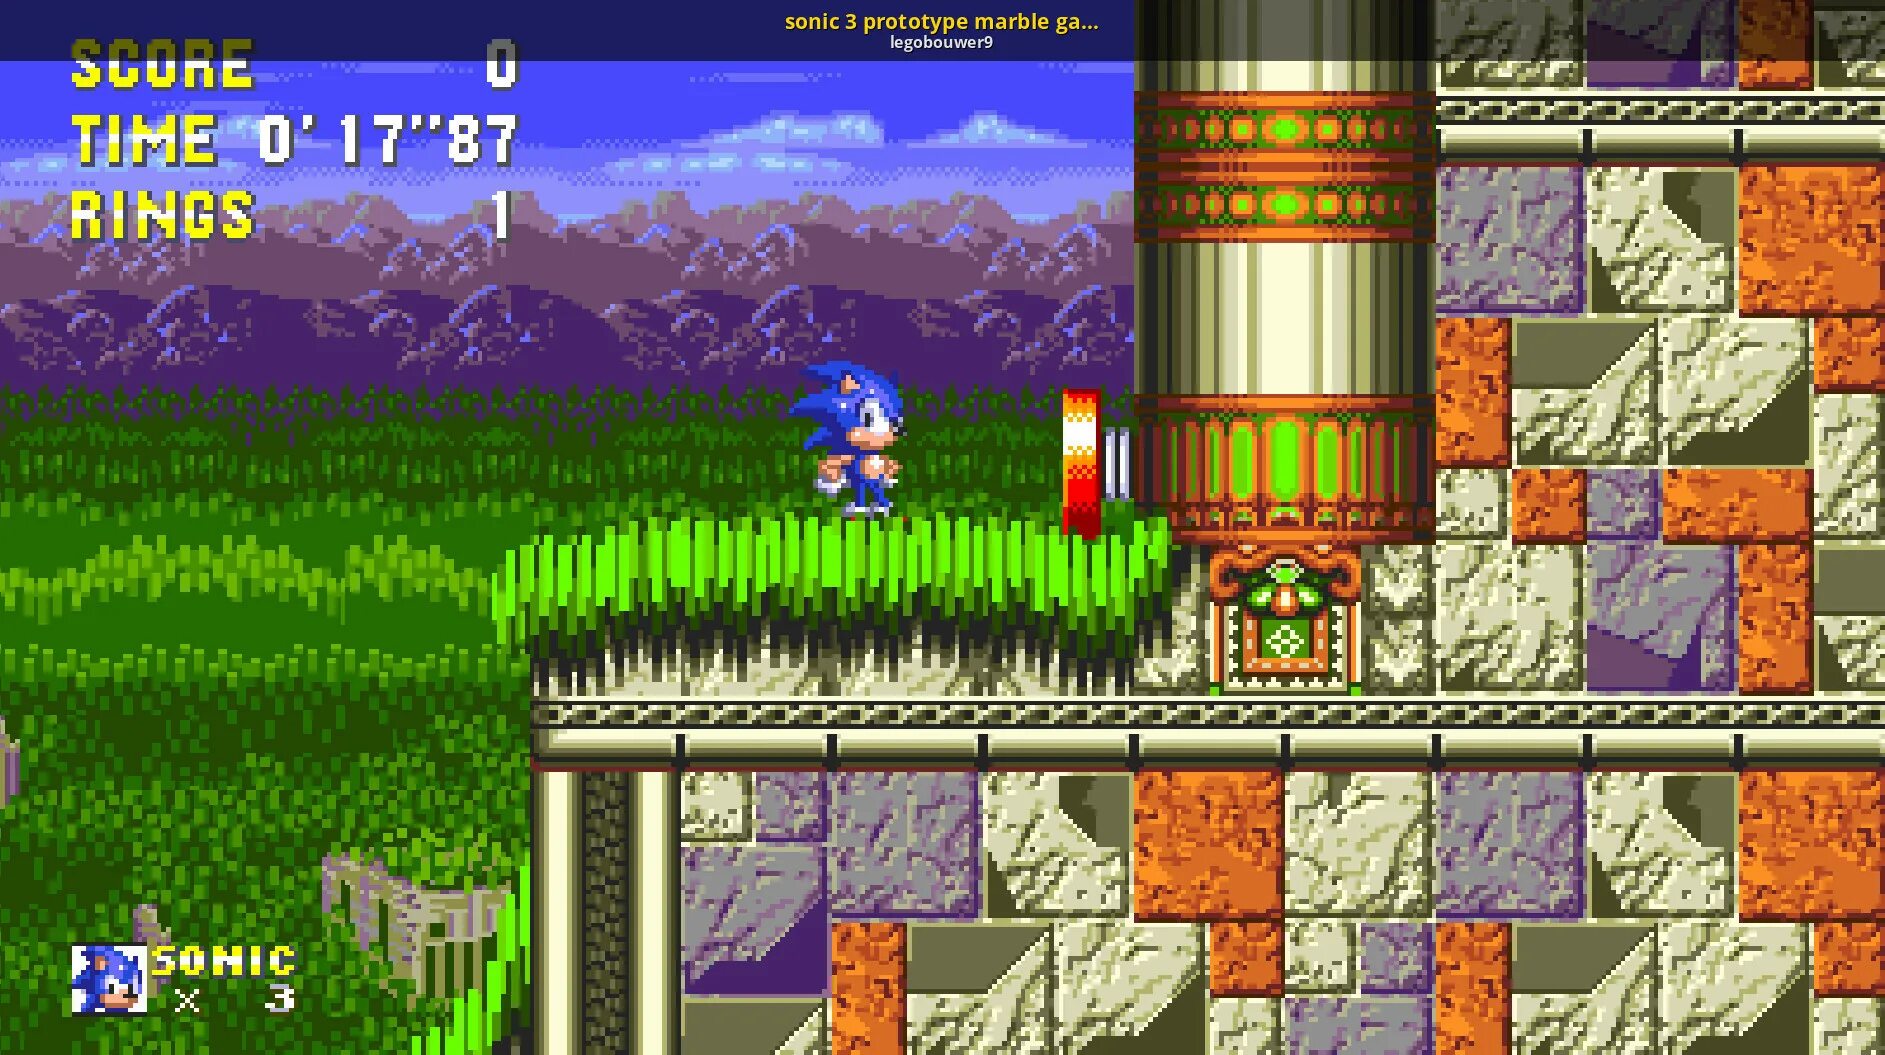 Sonic 3 island. Sonic 3 Marble Garden. Sonic 3 1993 Prototype. Соник 3 прототип. Marble Garden Zone Sonic 3 арт.